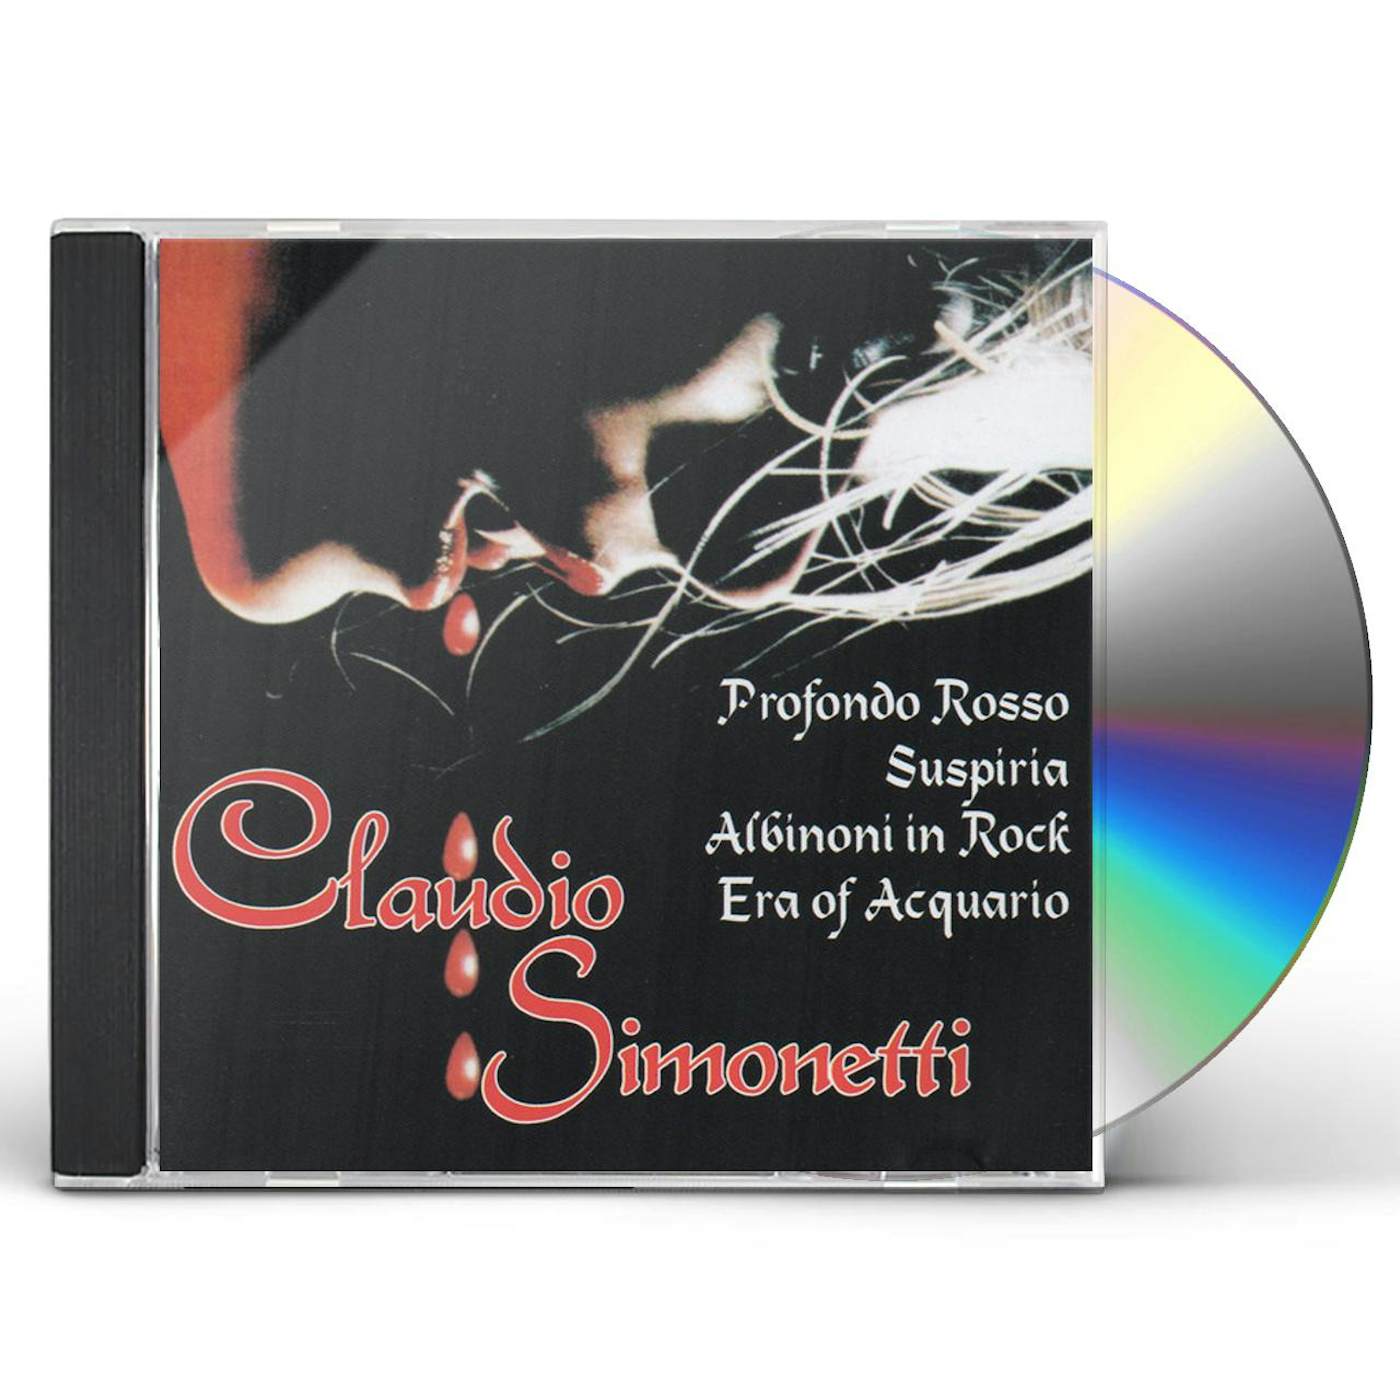 CLAUDIO SIMONETTI CD